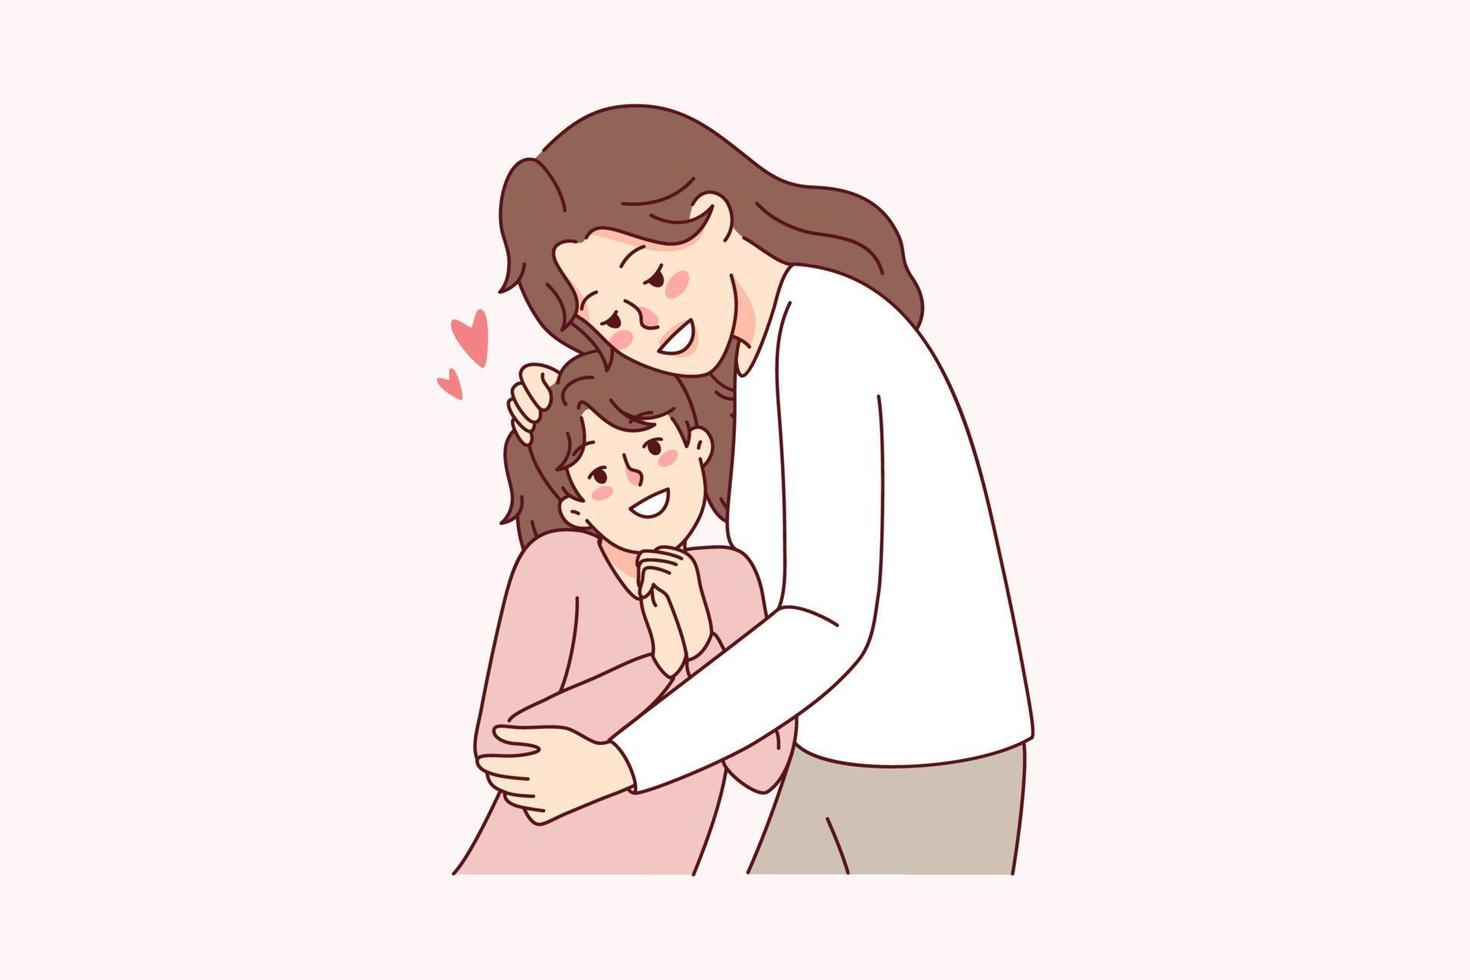 gelukkig moeder knuffelen klein dochter tonen liefde en zorg. glimlachen jong mam knuffelen omhelzing weinig meisje kind. moederschap en ouderschap. vector illustratie.